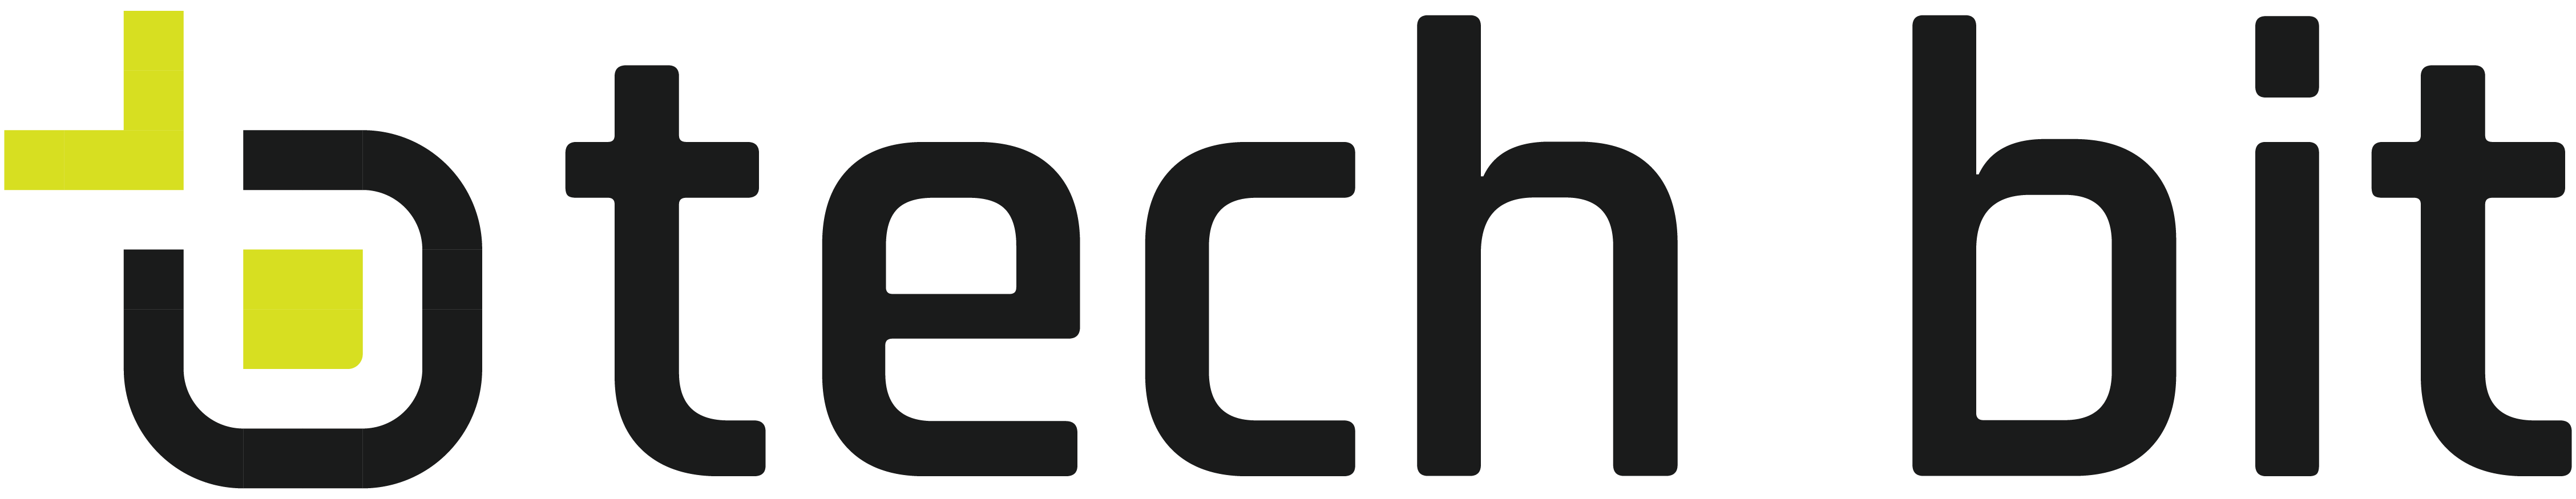 TechBit